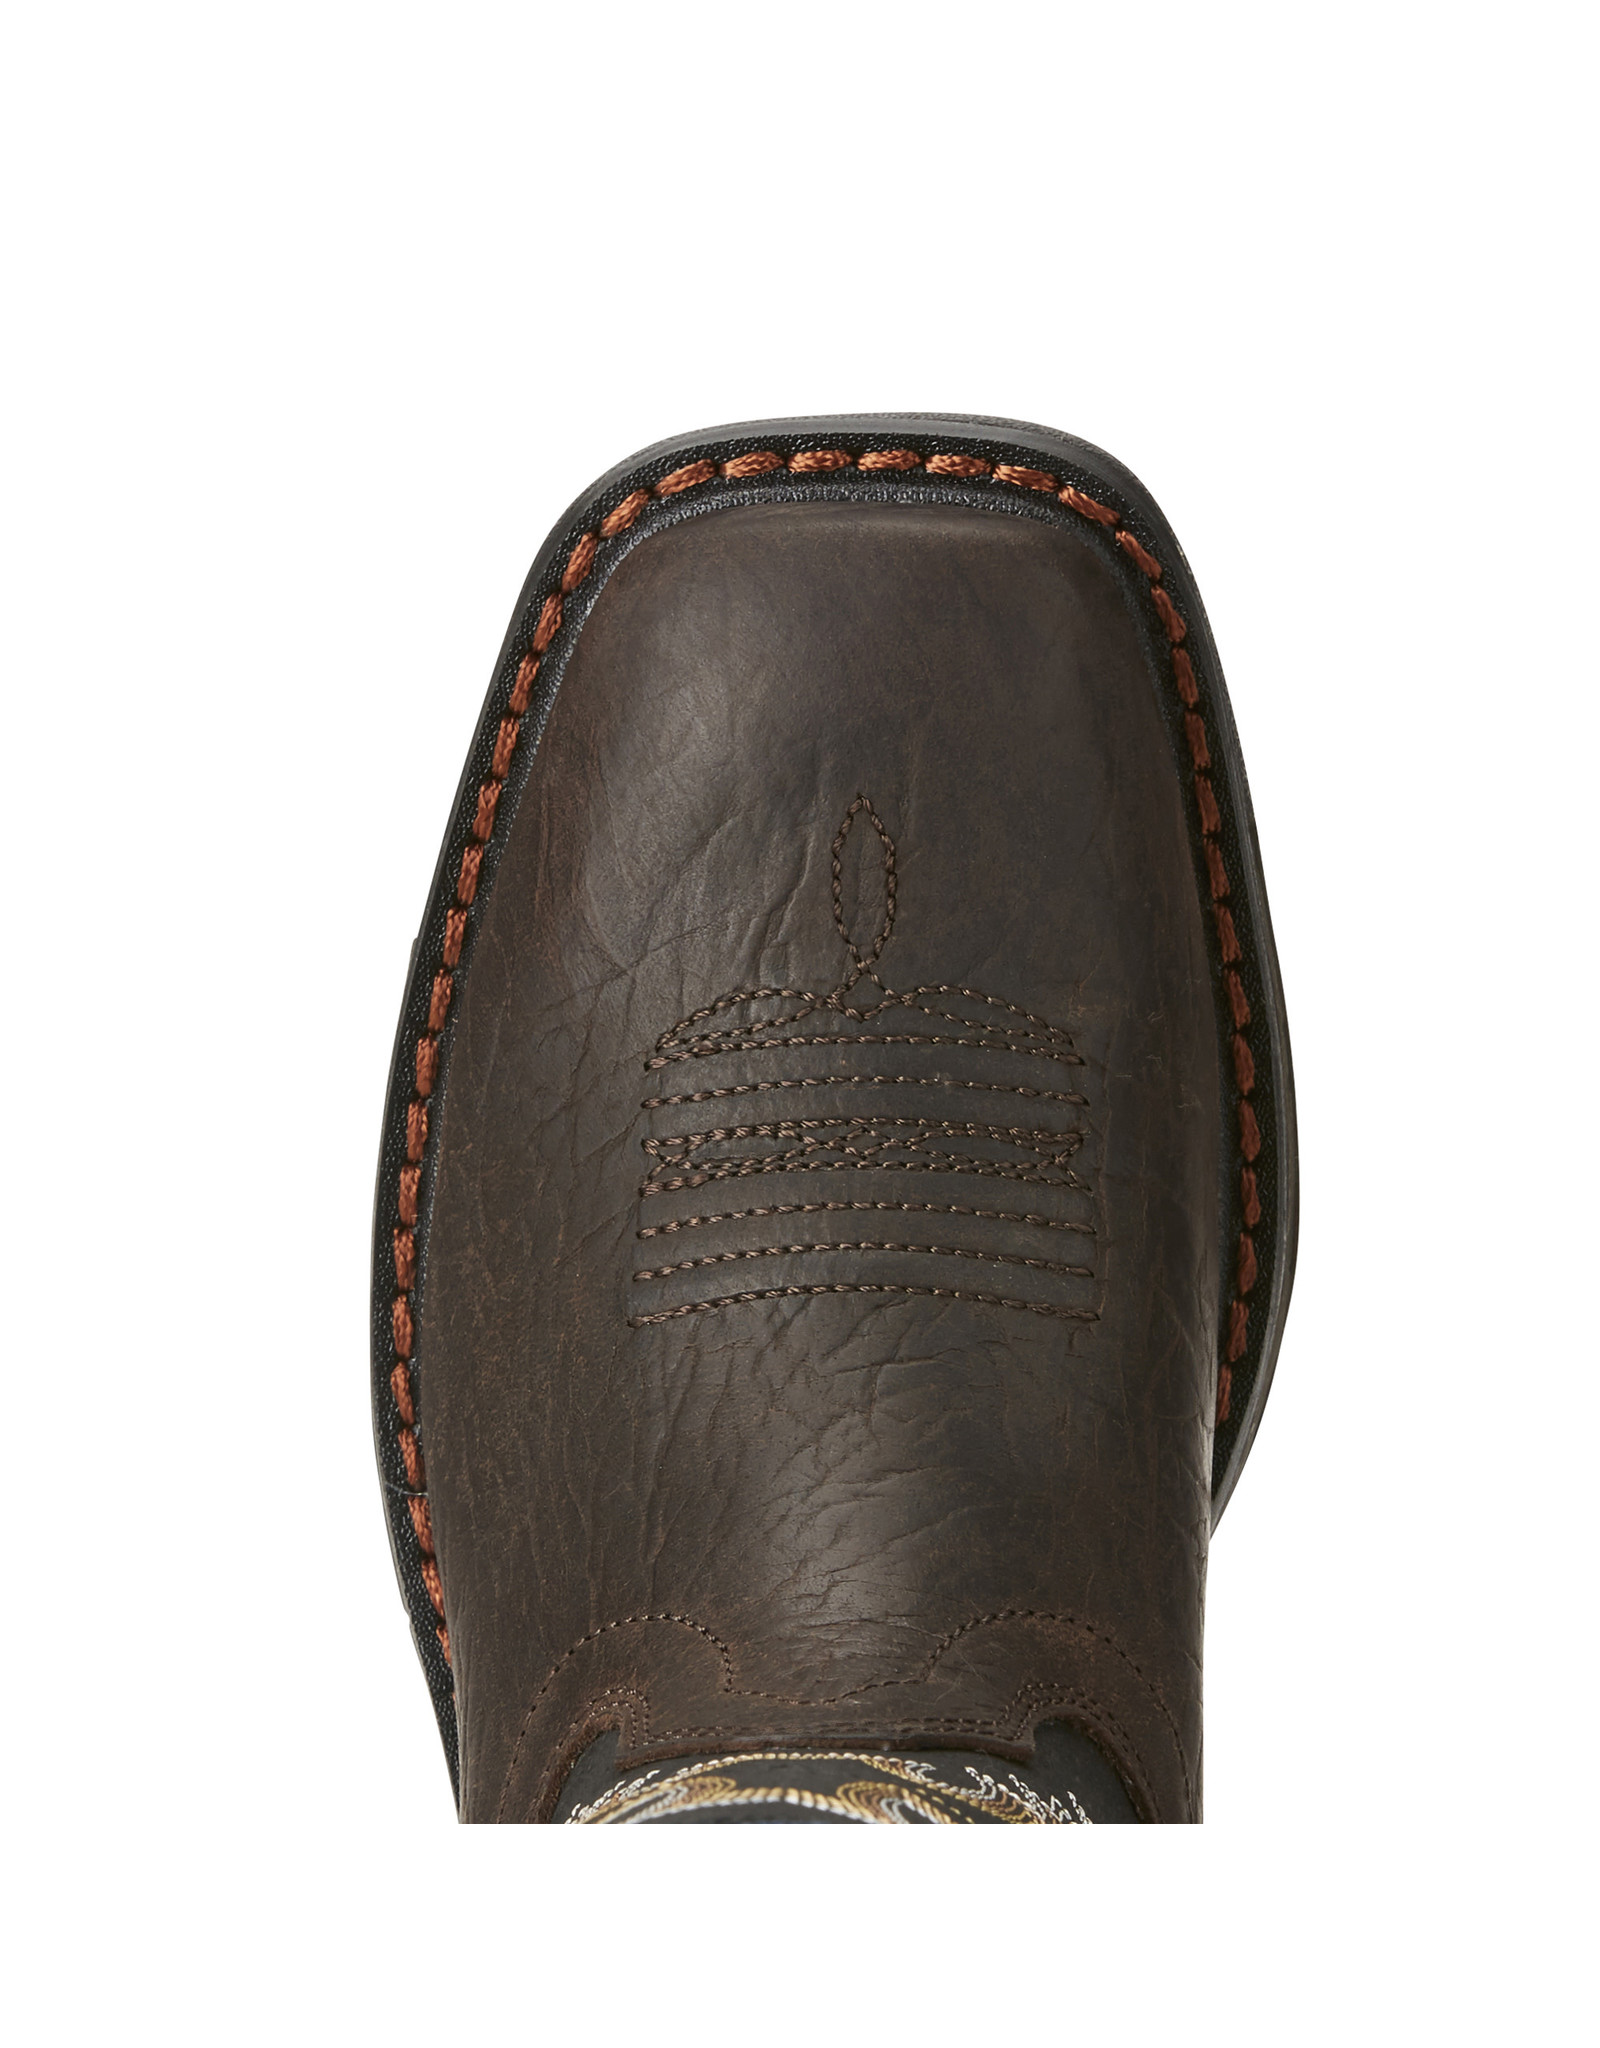 Ariat Workhog Bruin Brown 10021452 Western Boots